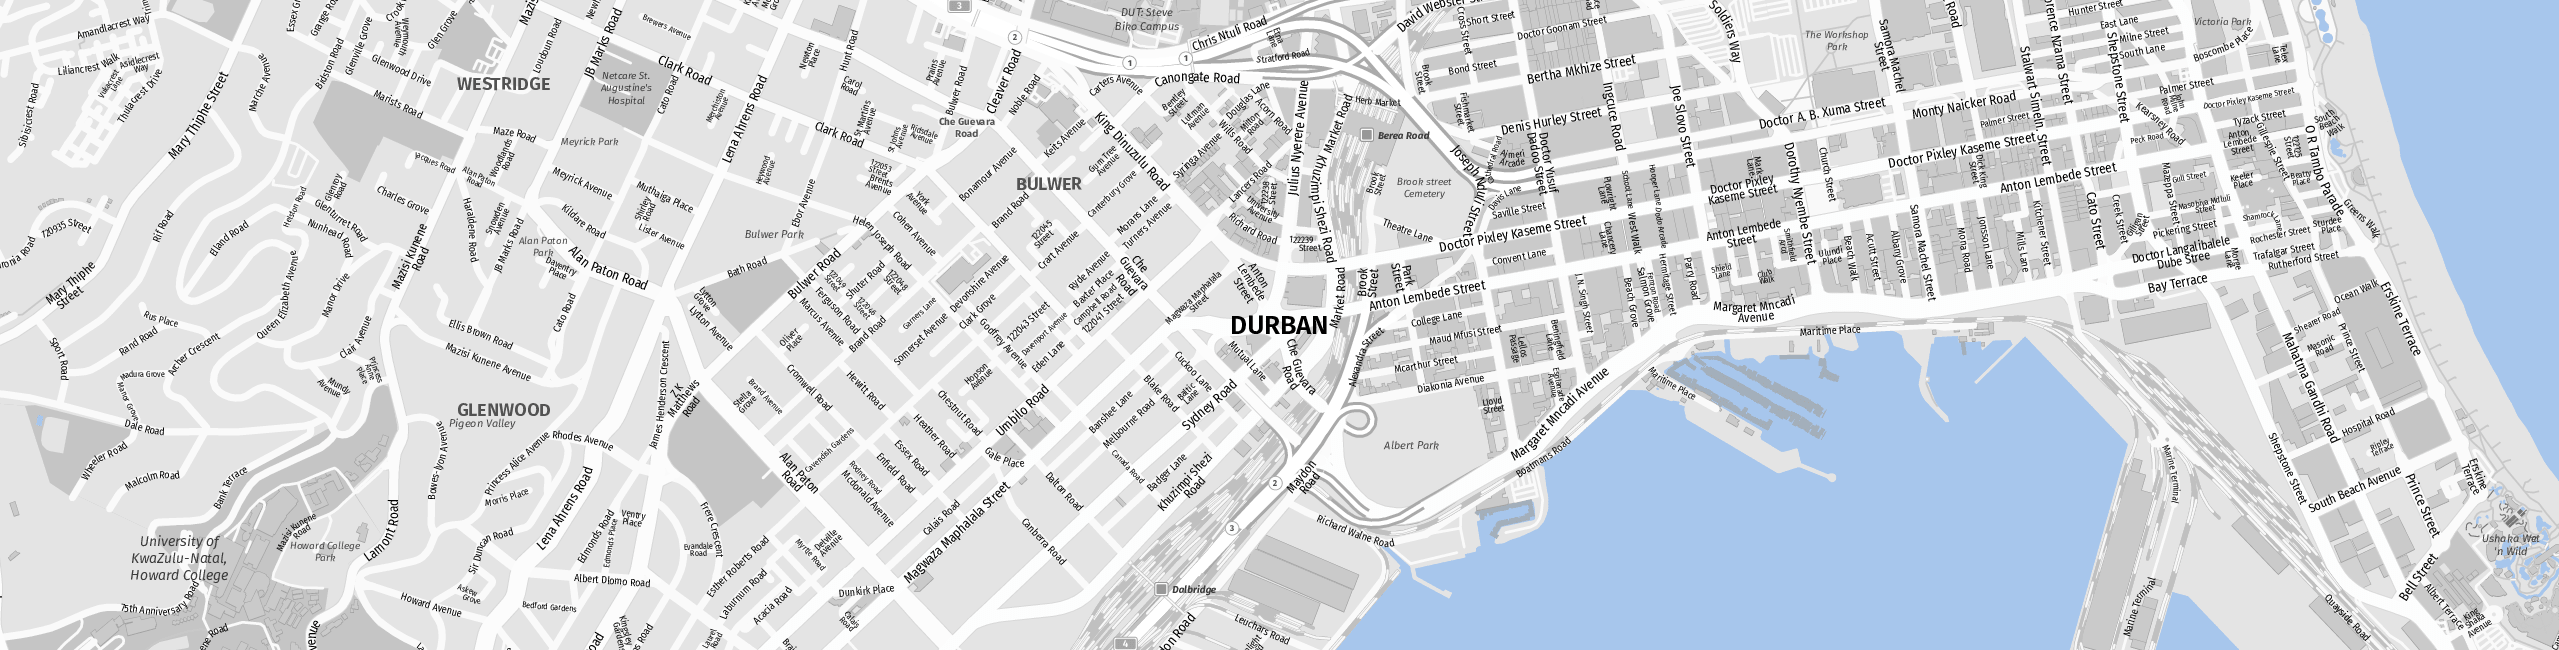 Stadtplan Durban zum Downloaden.